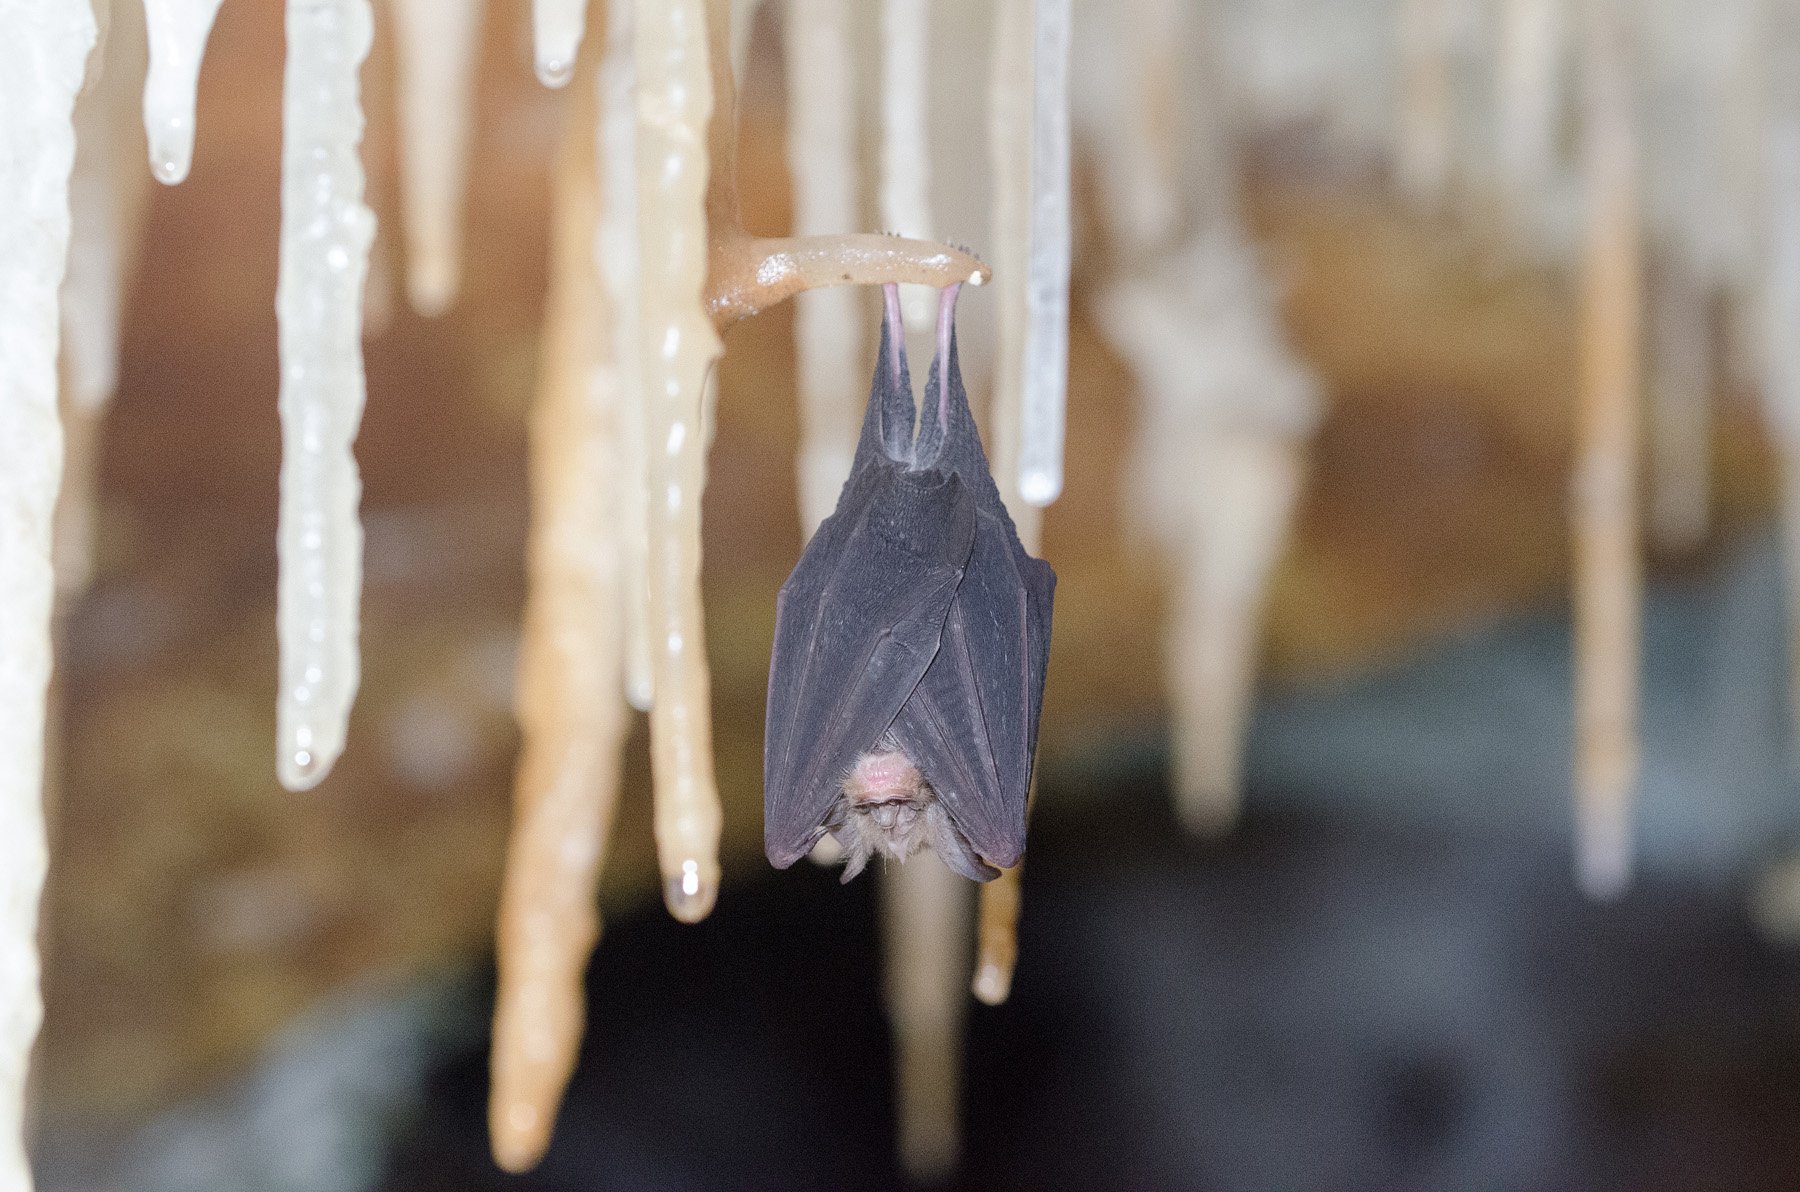 Eastern Horseshoe-bat